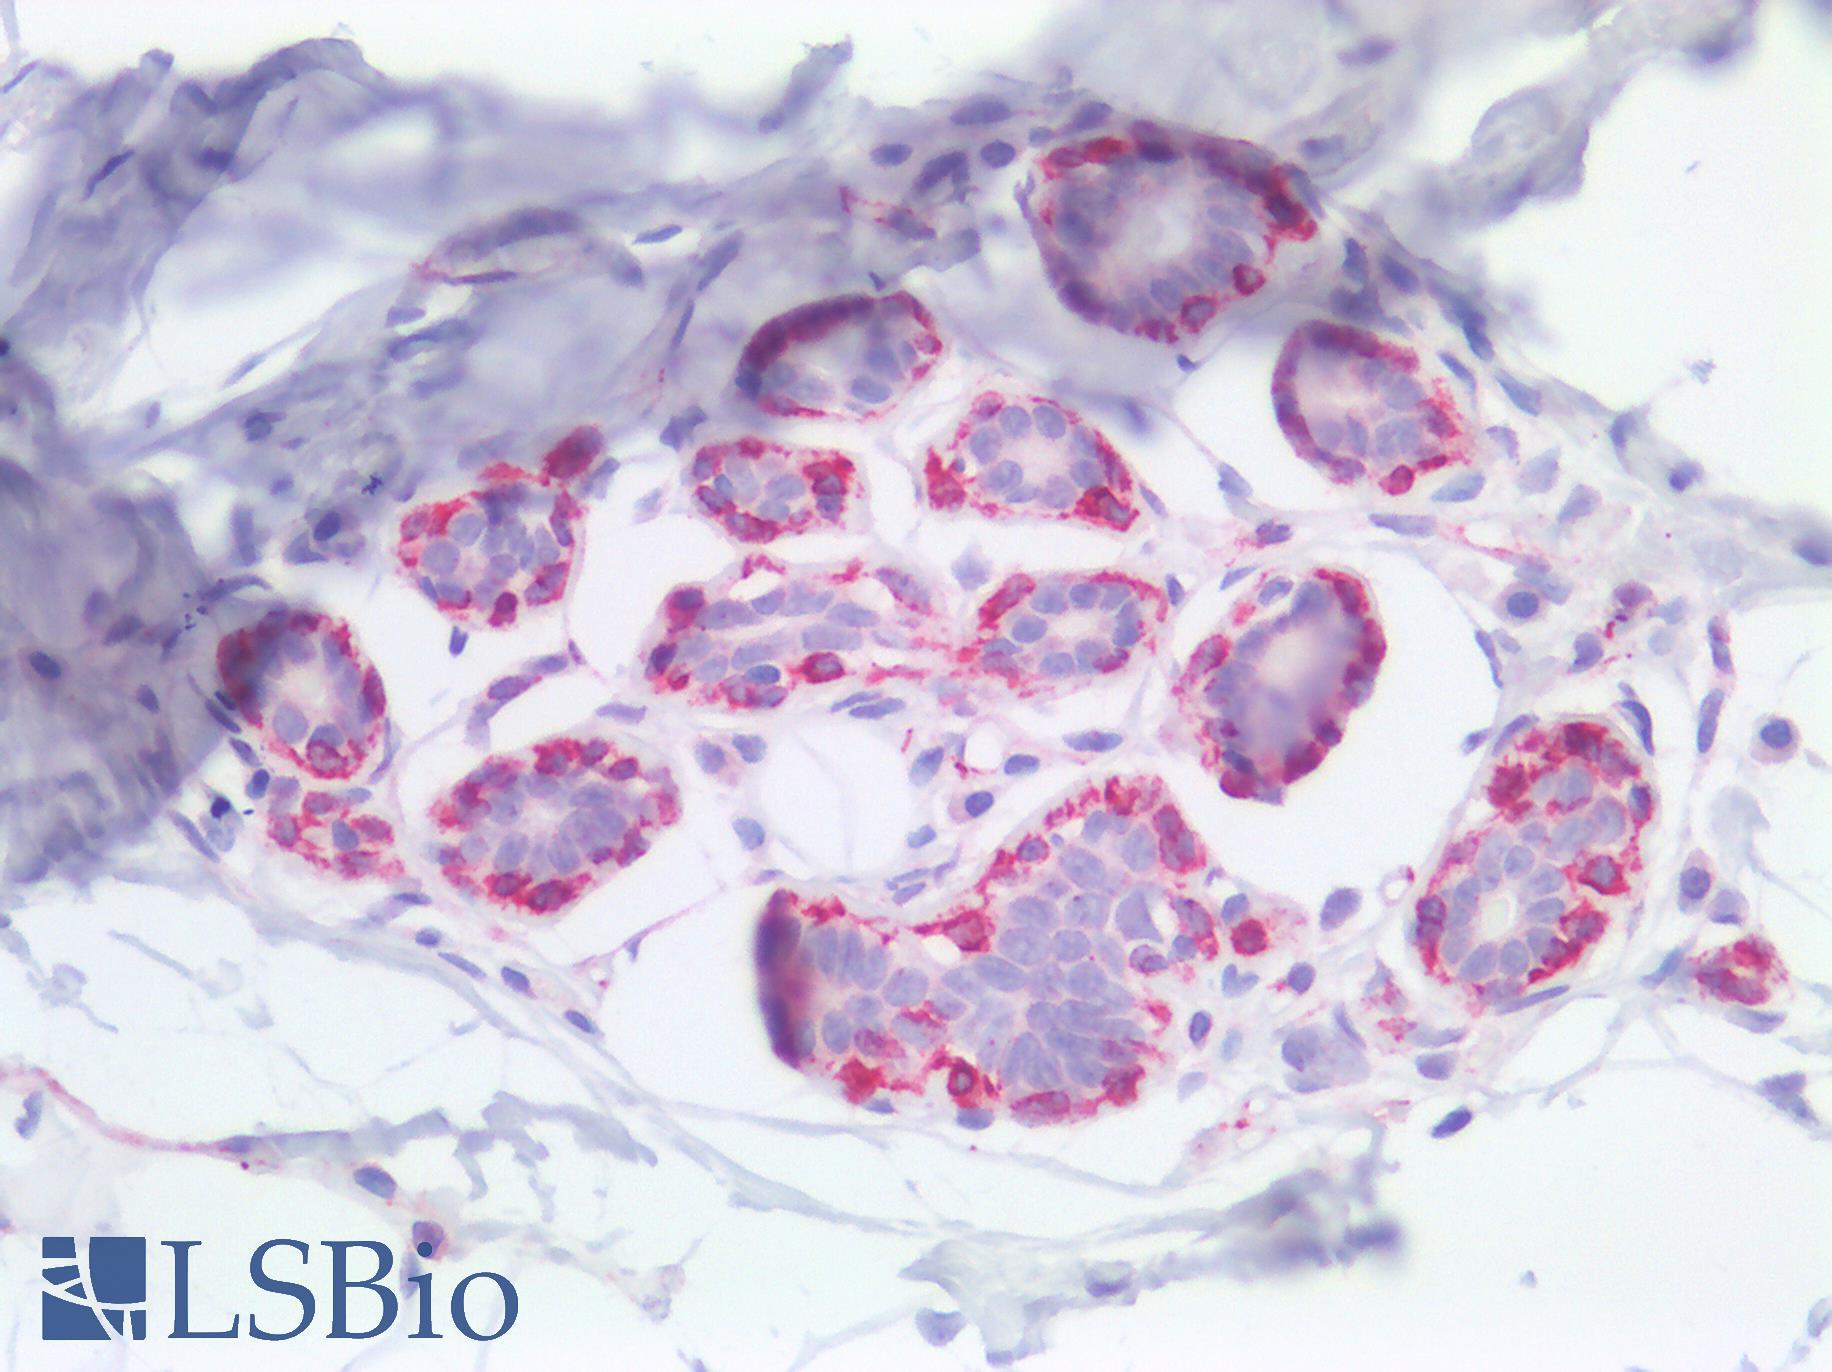 NES / Nestin Antibody - Human Breast: Formalin-Fixed, Paraffin-Embedded (FFPE)